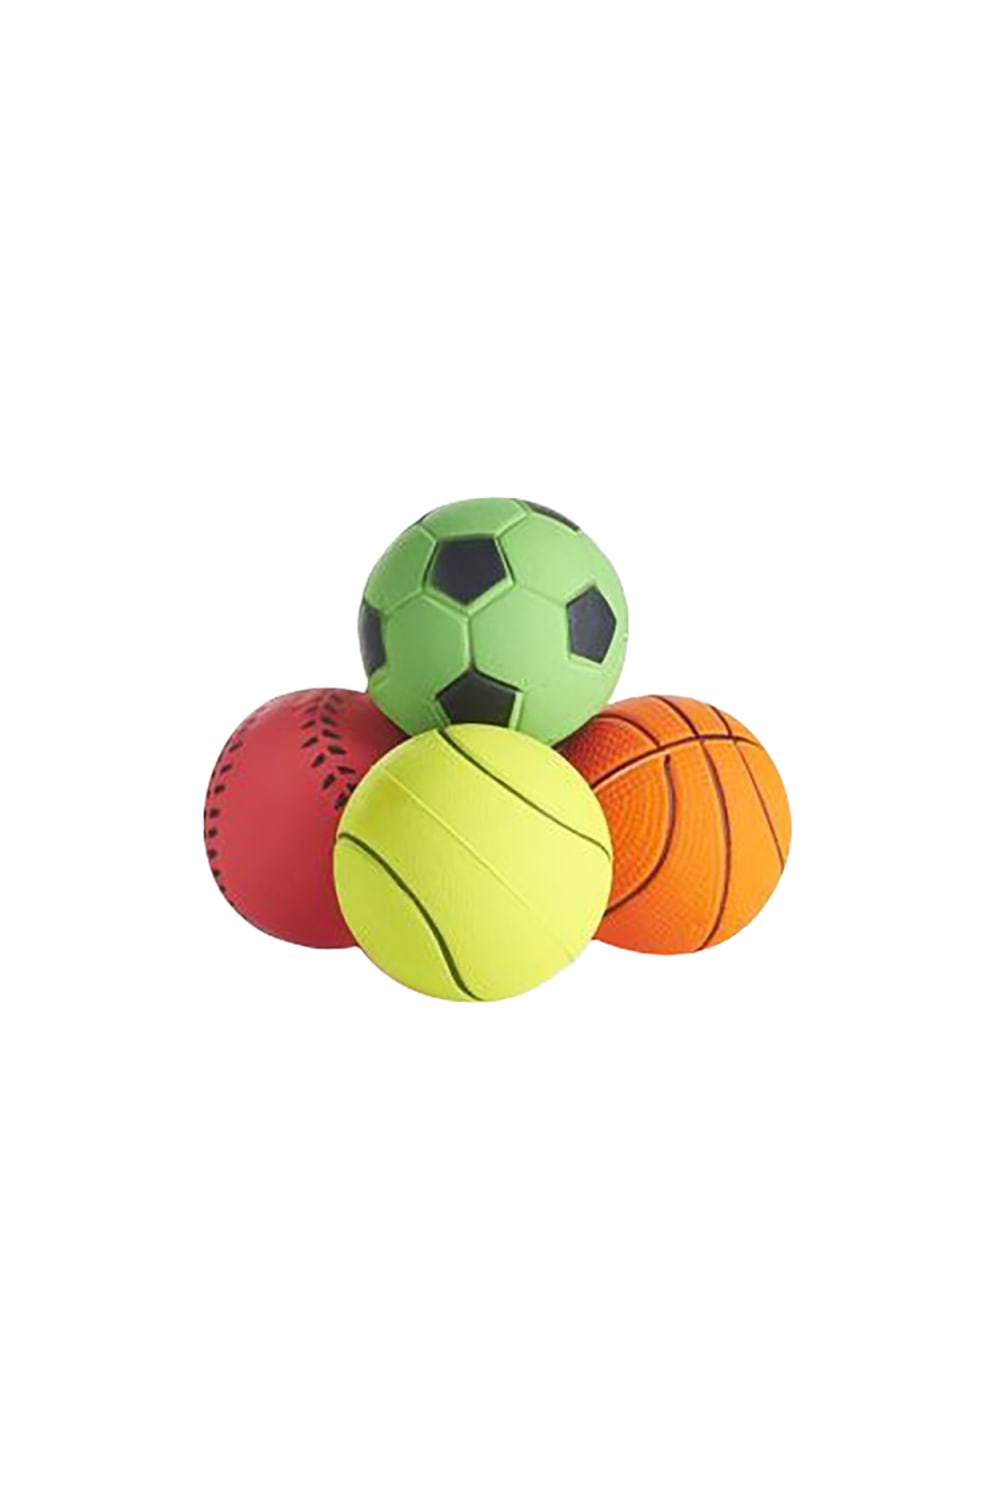 Sharples Sponge Dog Toy Balls (Multicolored) (4pk)